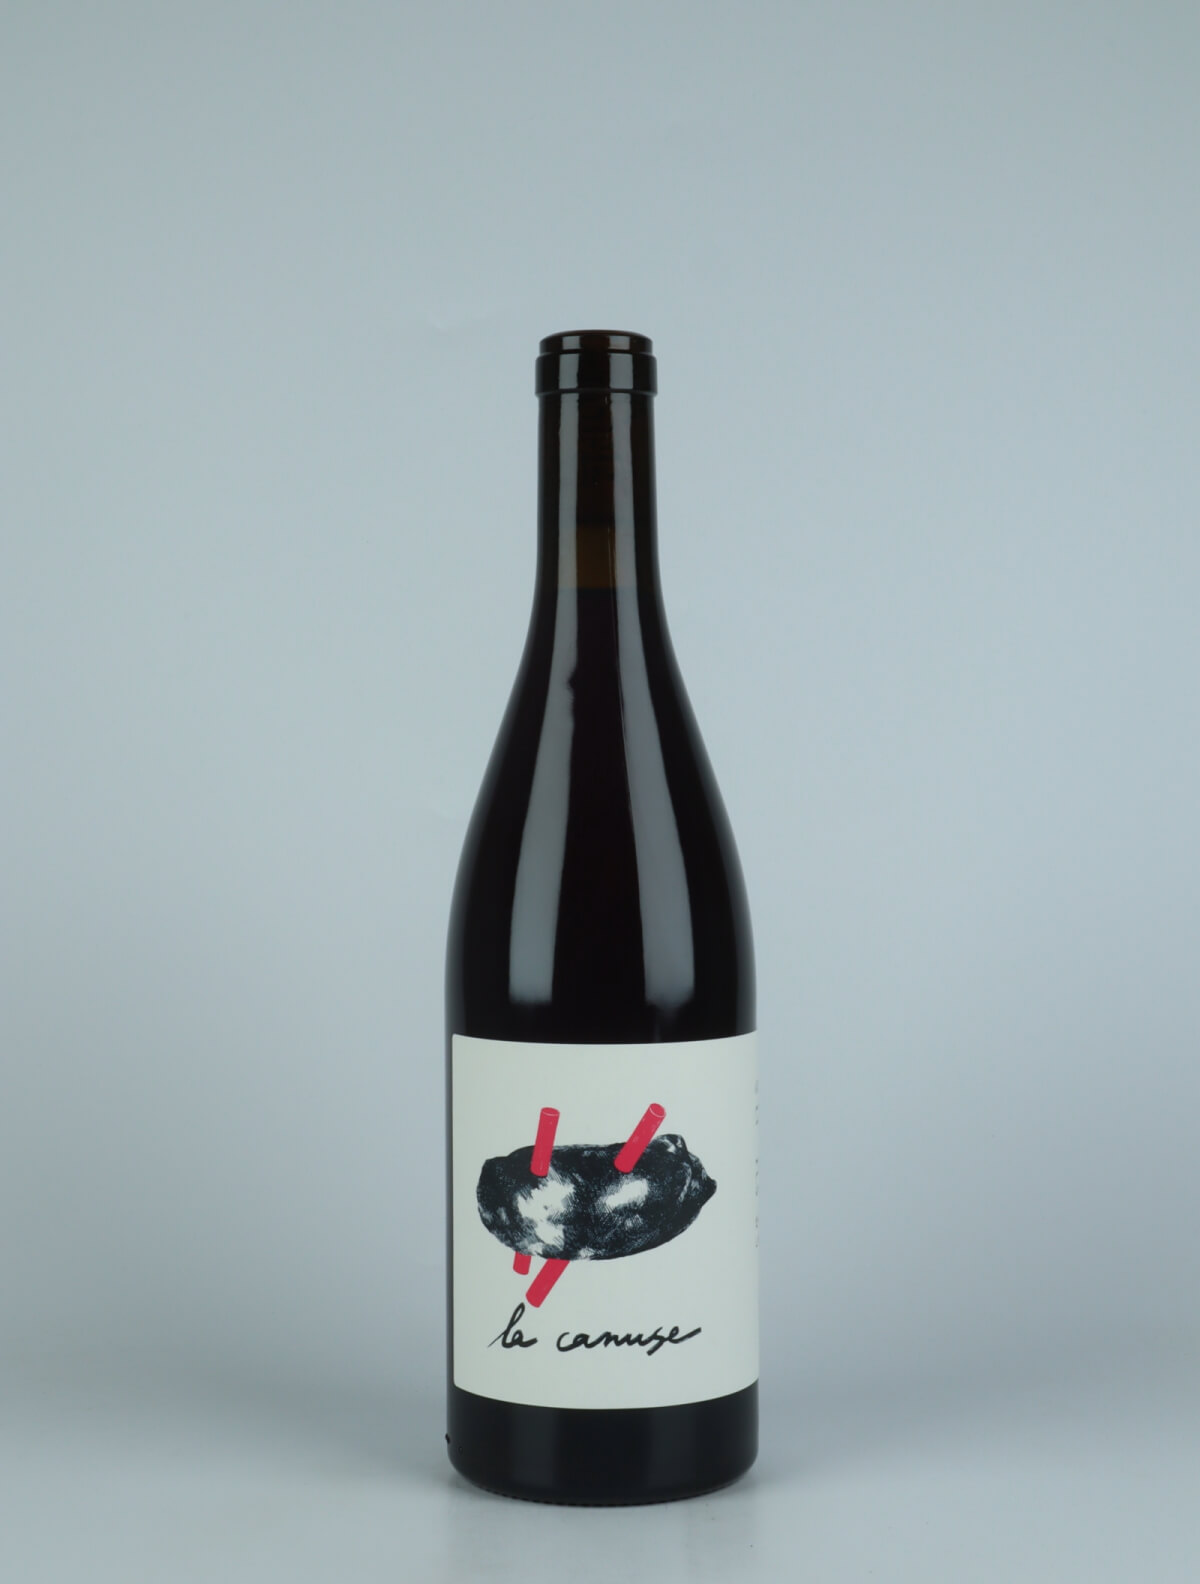 A bottle 2021 La Canuse Red wine from Slope, Rhône in France